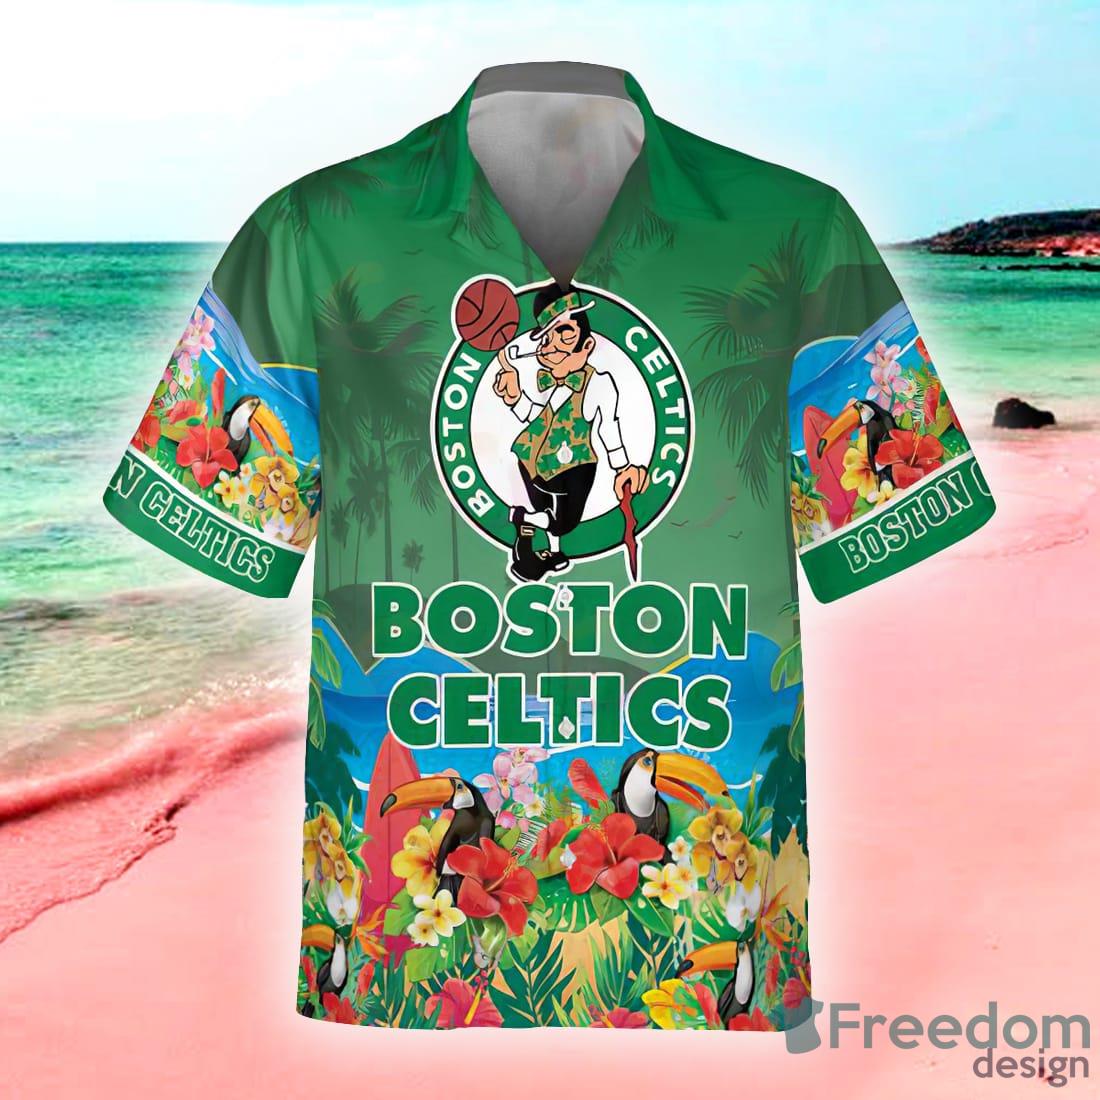 celtics playoff shirt